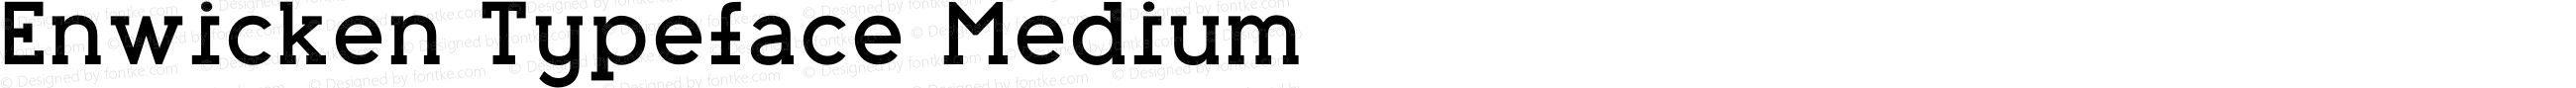 Enwicken Typeface Medium